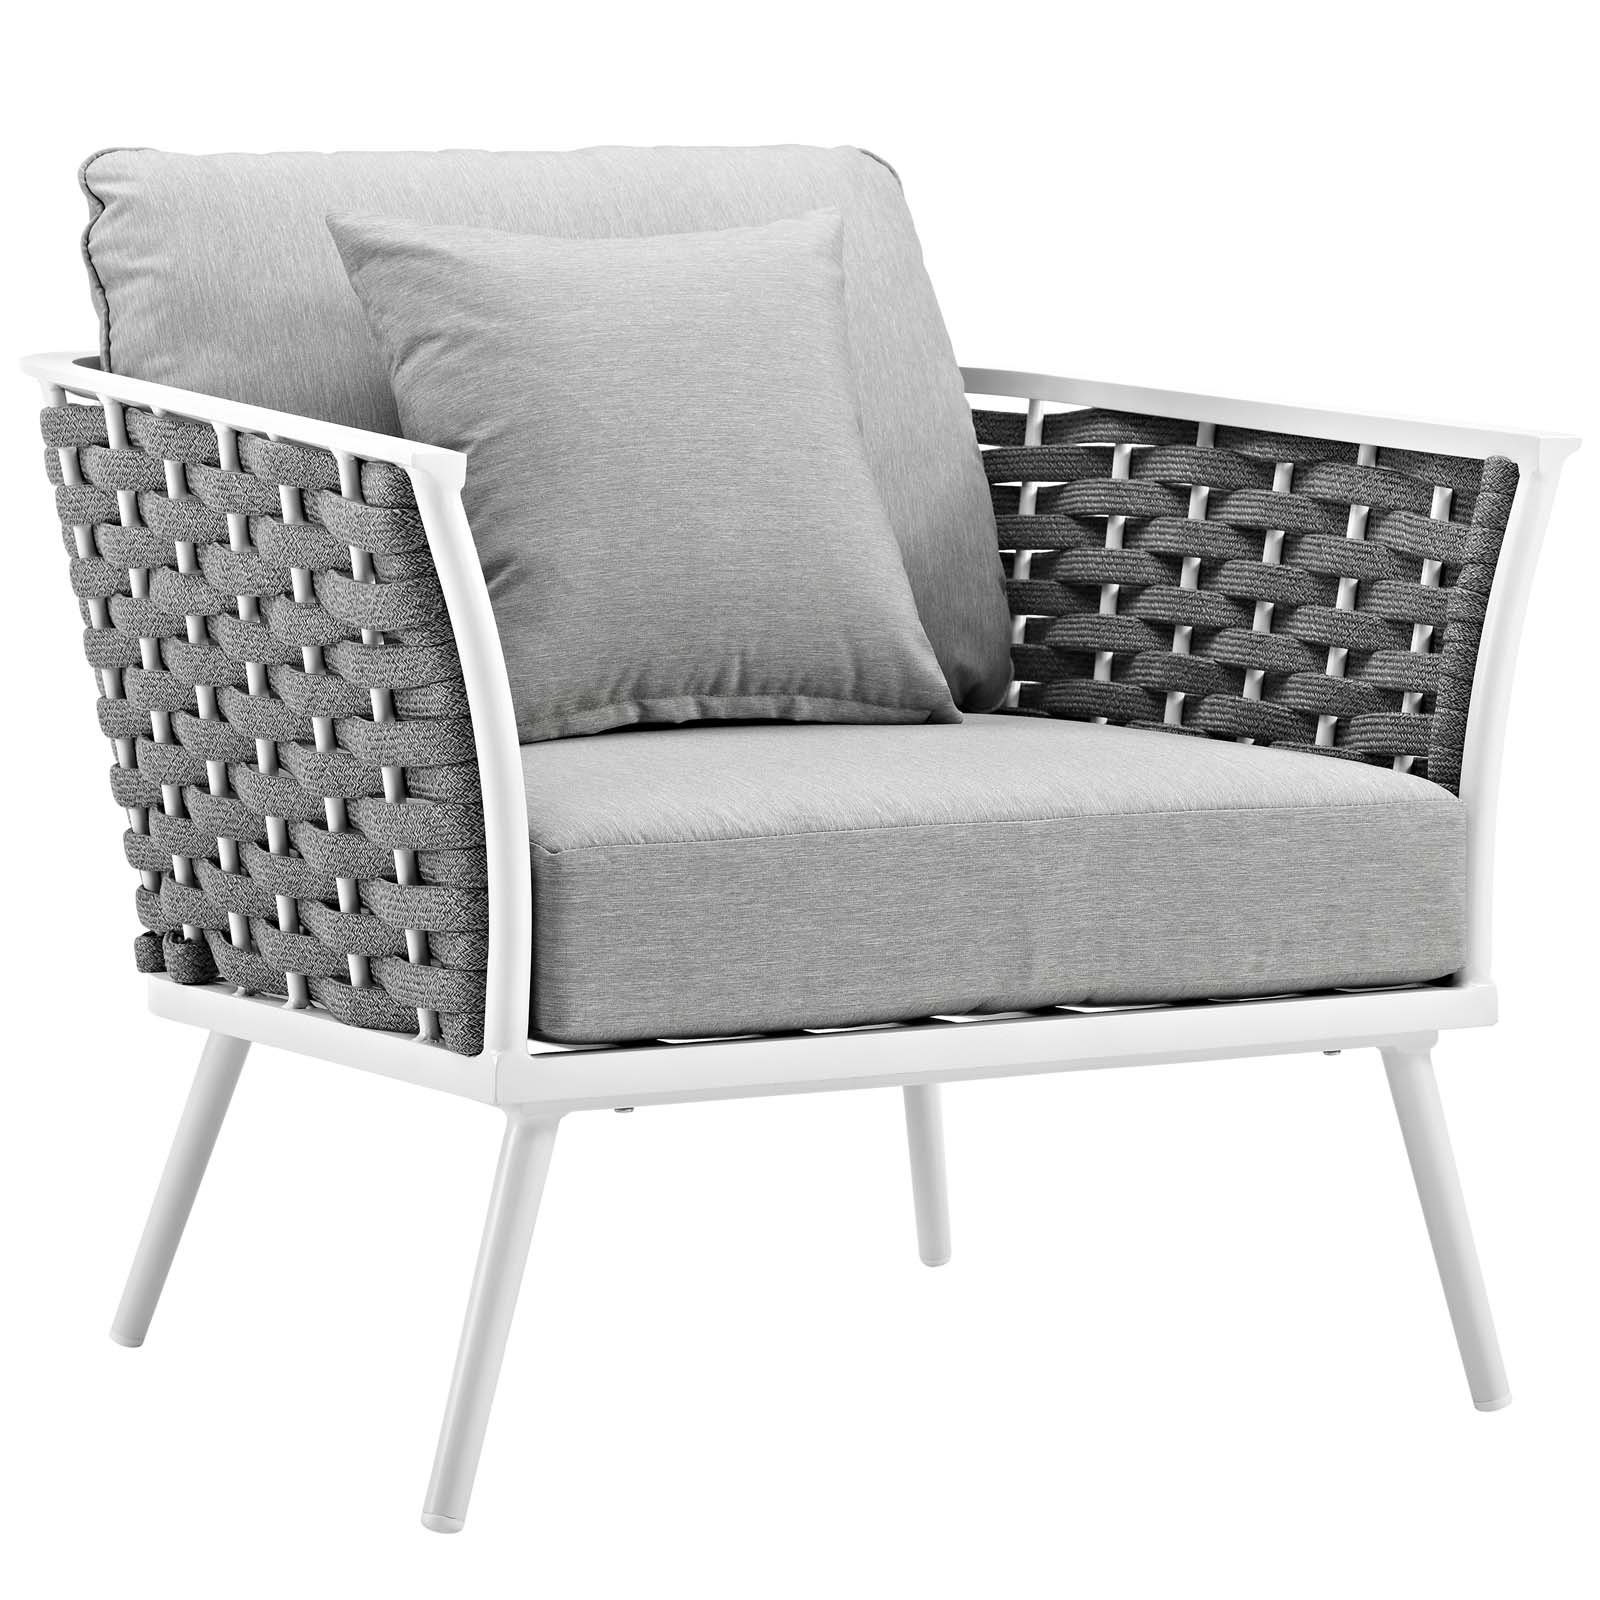 Modern Contemporary Urban Outdoor Patio Balcony Garden Furniture Lounge Chair Armchair, Set of Two, Fabric Aluminium, White Grey Gray - image 5 of 6